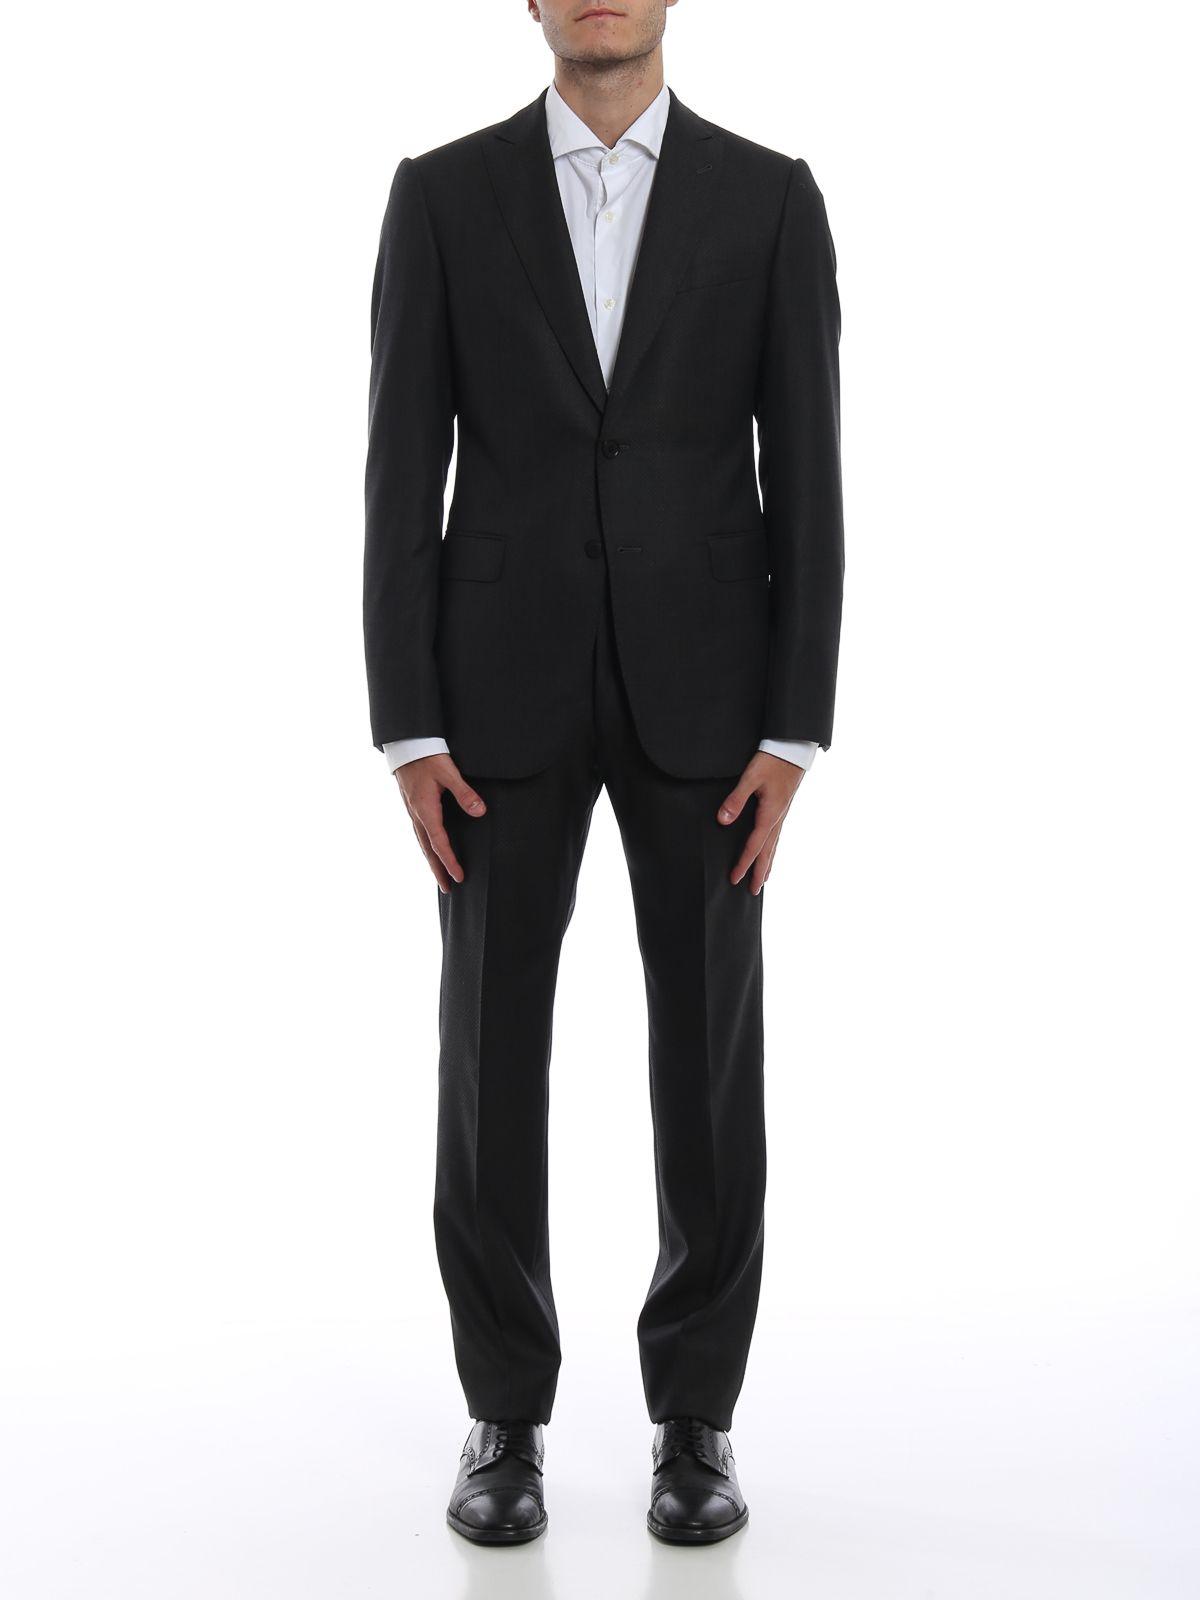 Emporio Armani Wool Suit in Black for Men - Lyst